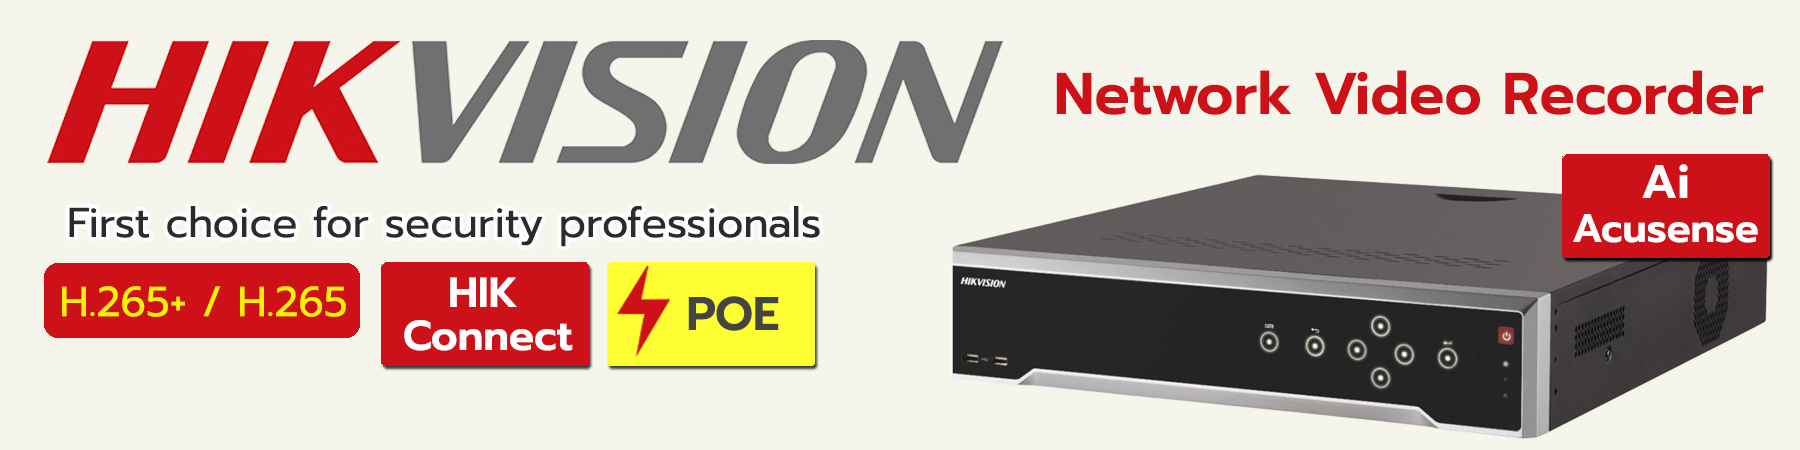 Hikvision NVR,Hikvision NVR DS-7100NI-Q Series,Hikvision NVR DS-7600NI-K Series,Hikvision NVR DS-7700NI-K Series,Hikvision NVR DS-7600NXI-K Acusense Series